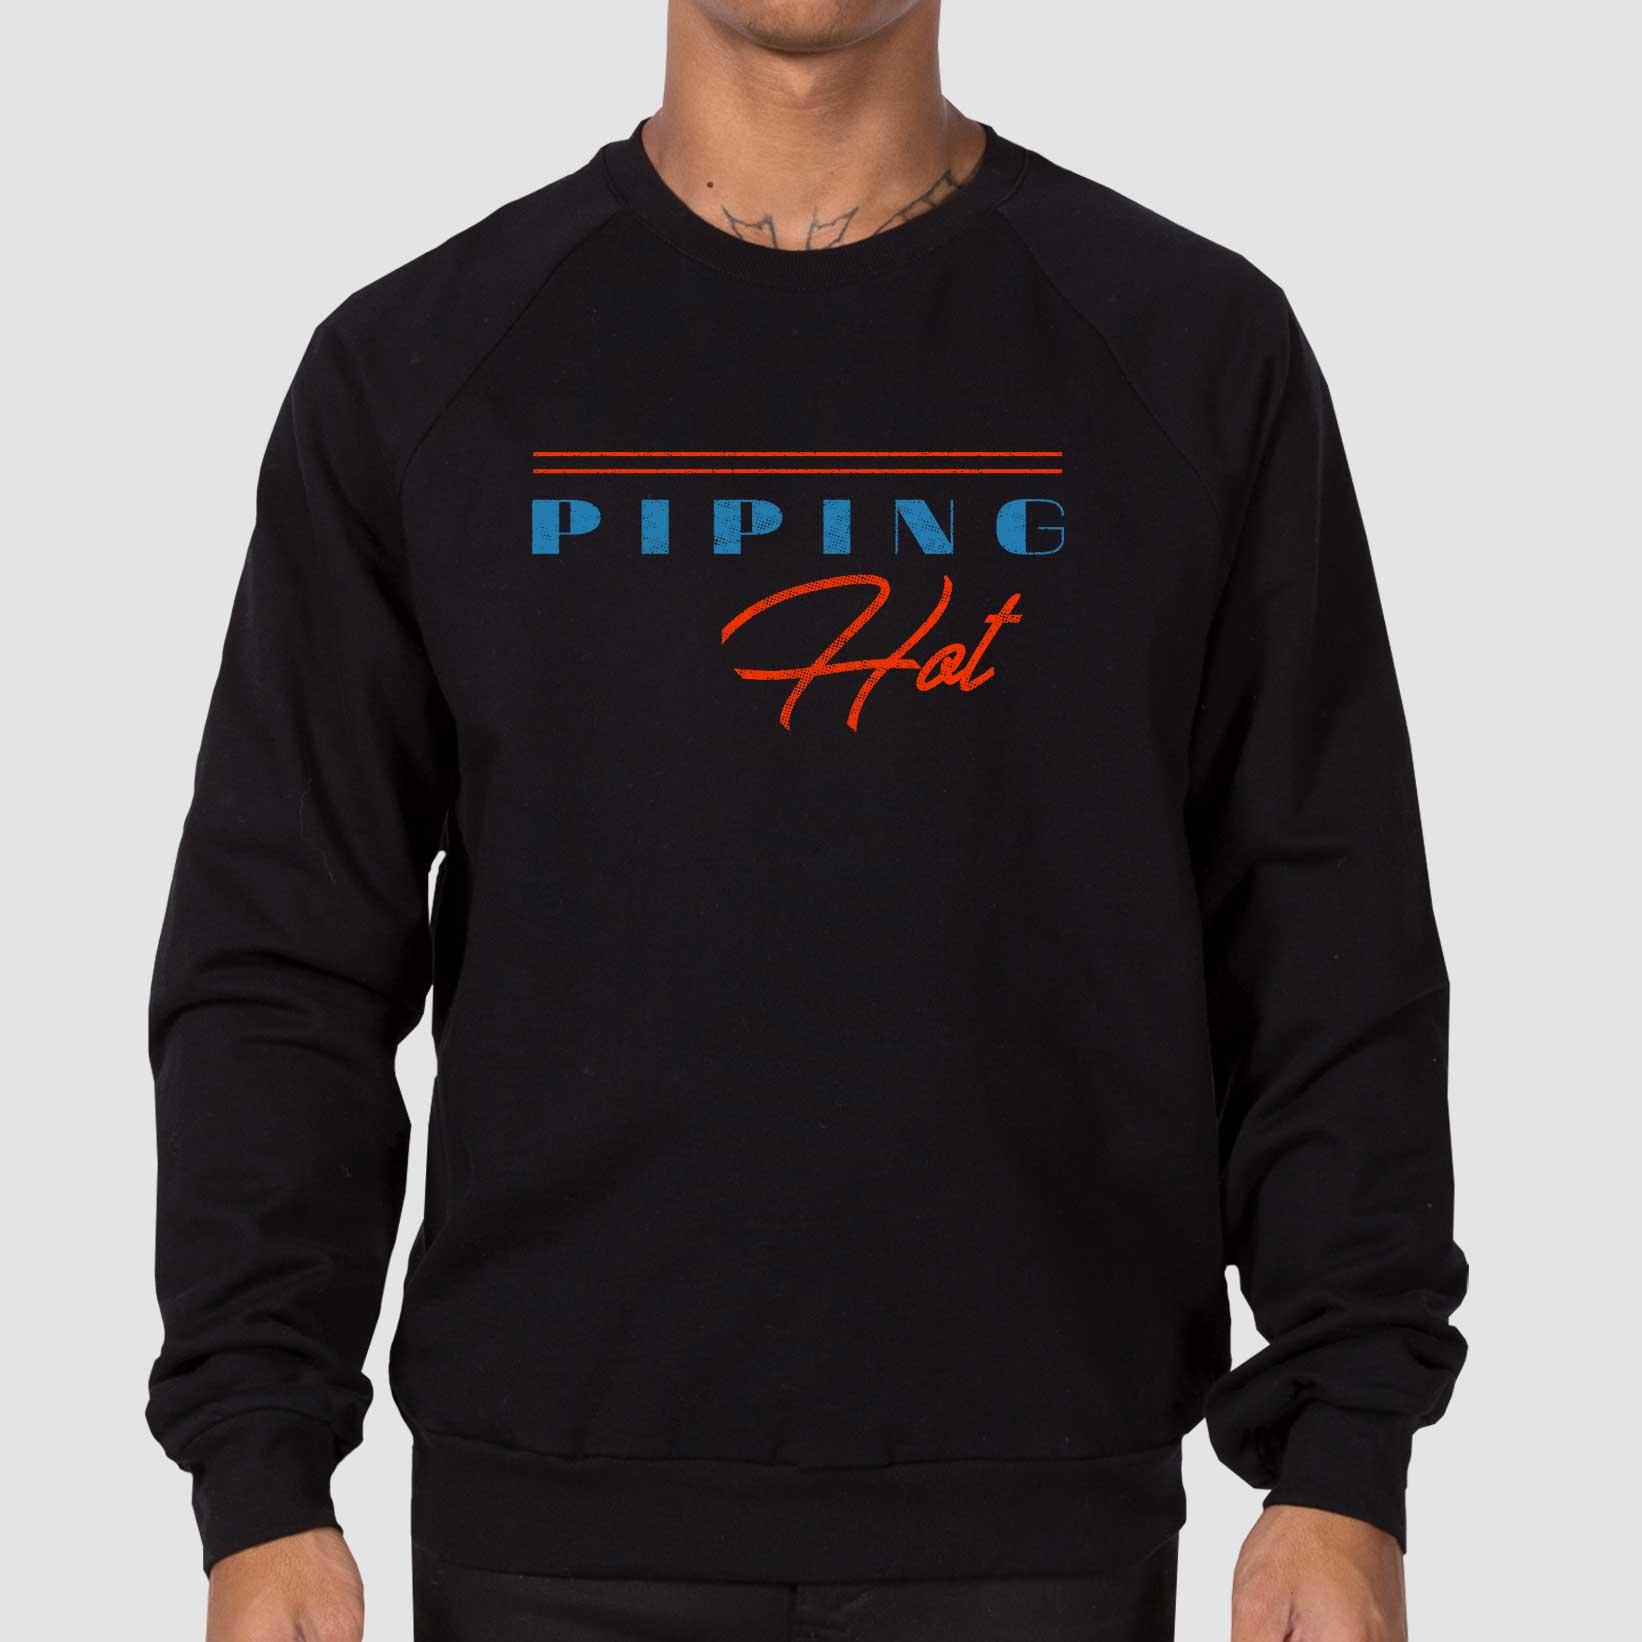 Black Piping Hot Unisex California Fleece Raglan Sweatshirt by Snaxtime